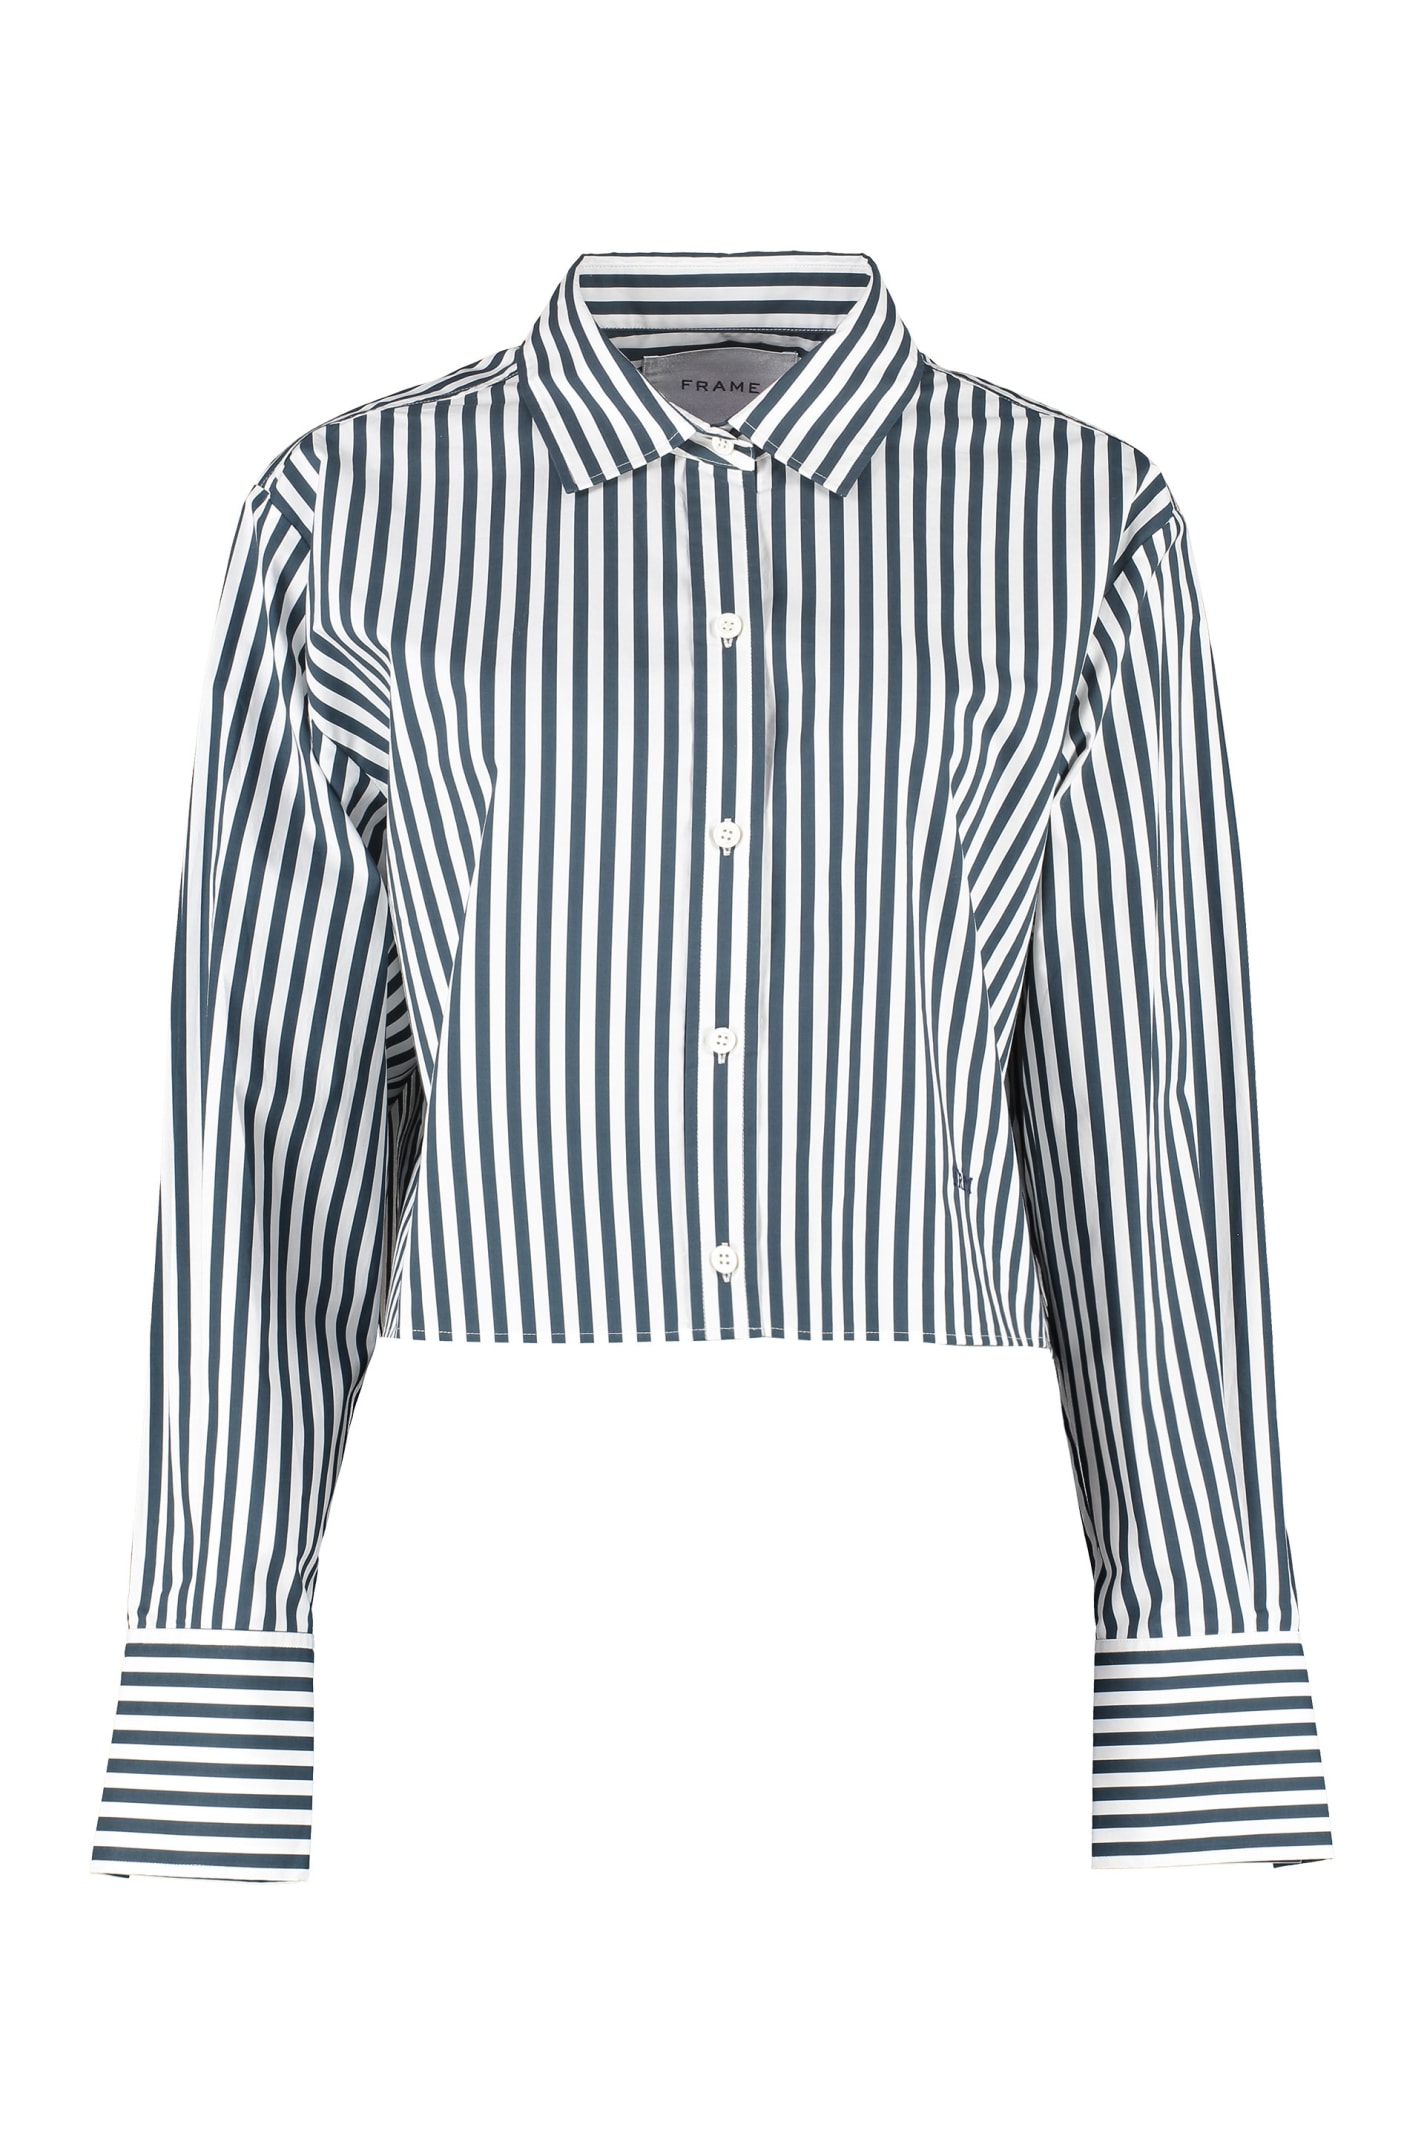 Frame Striped Cotton Shirt